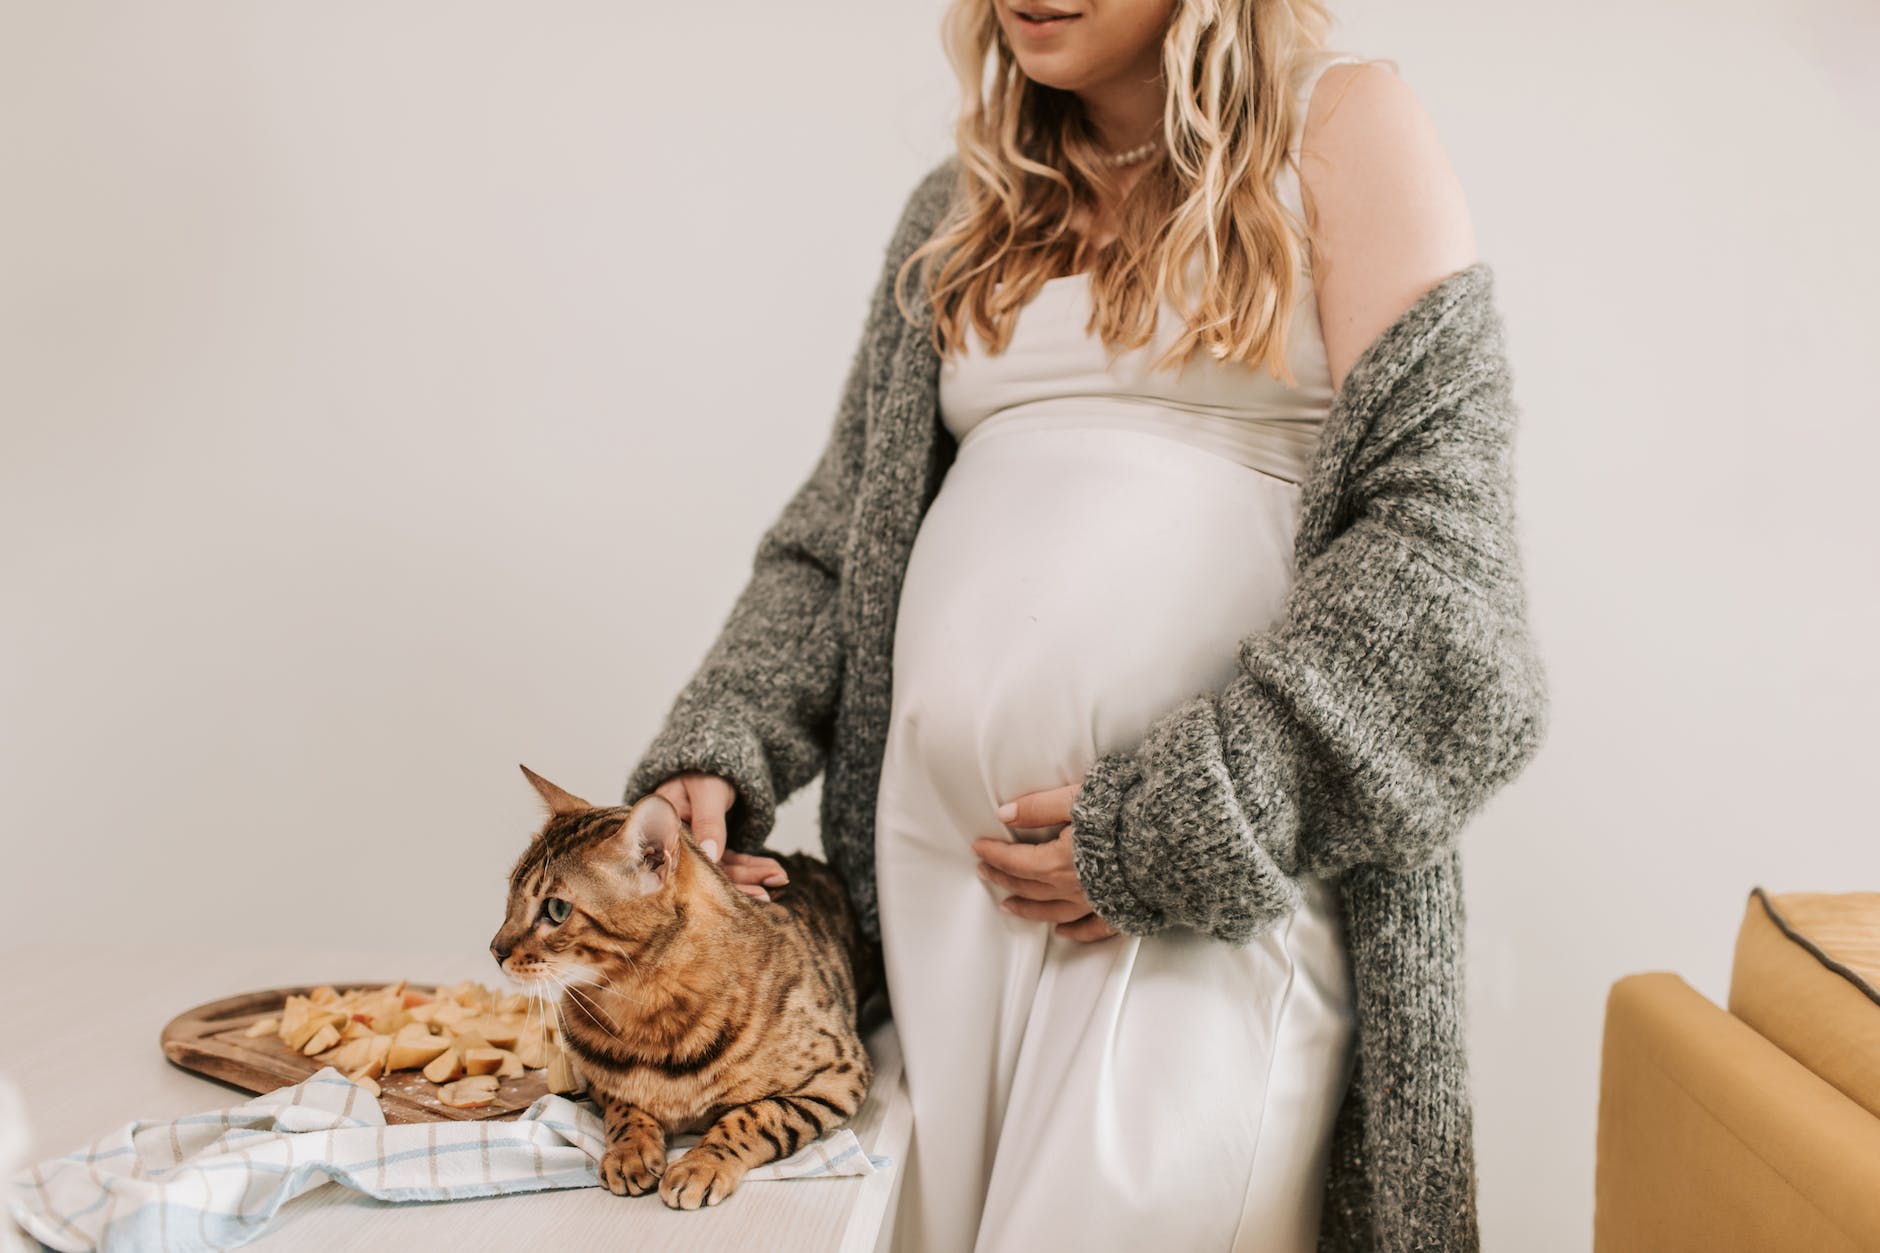 pregnant woman petting a cat